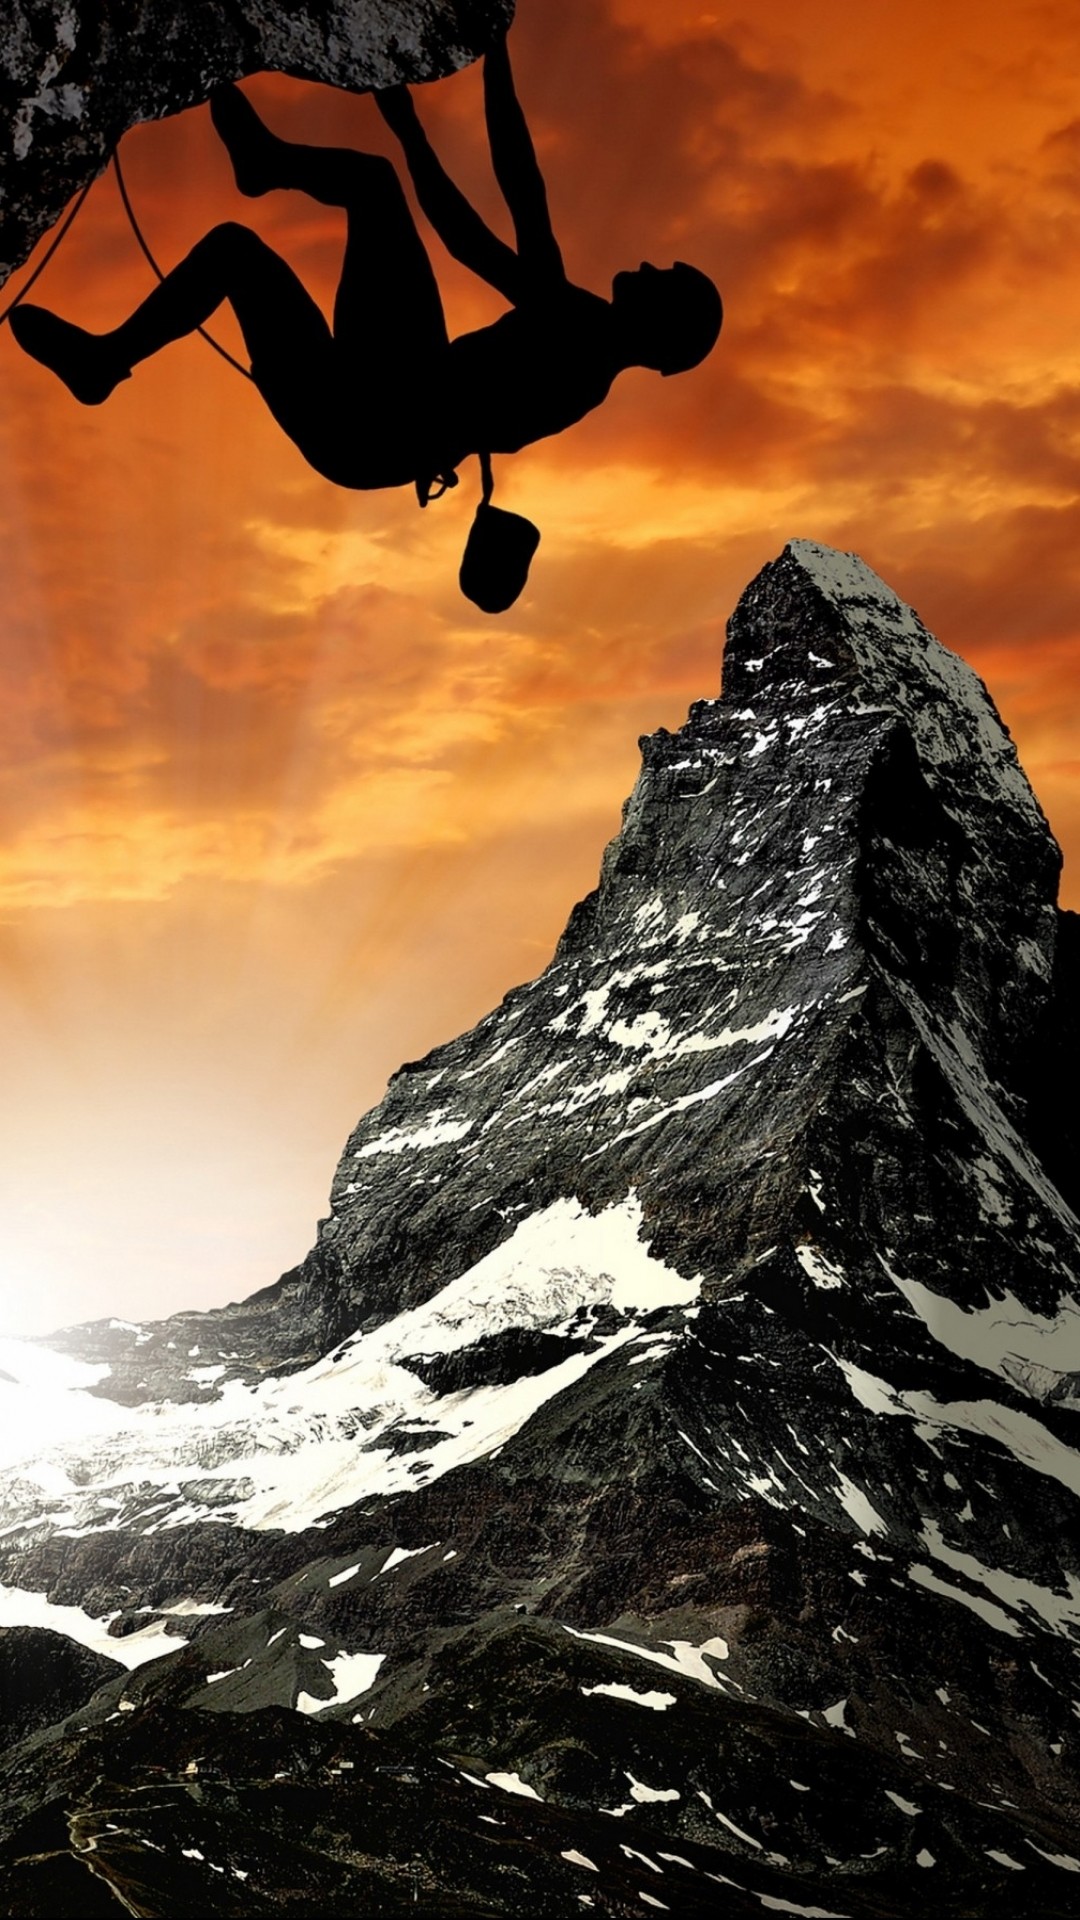 papel tapiz de escalada,deporte extremo,cielo,cumbre,rock,atmósfera